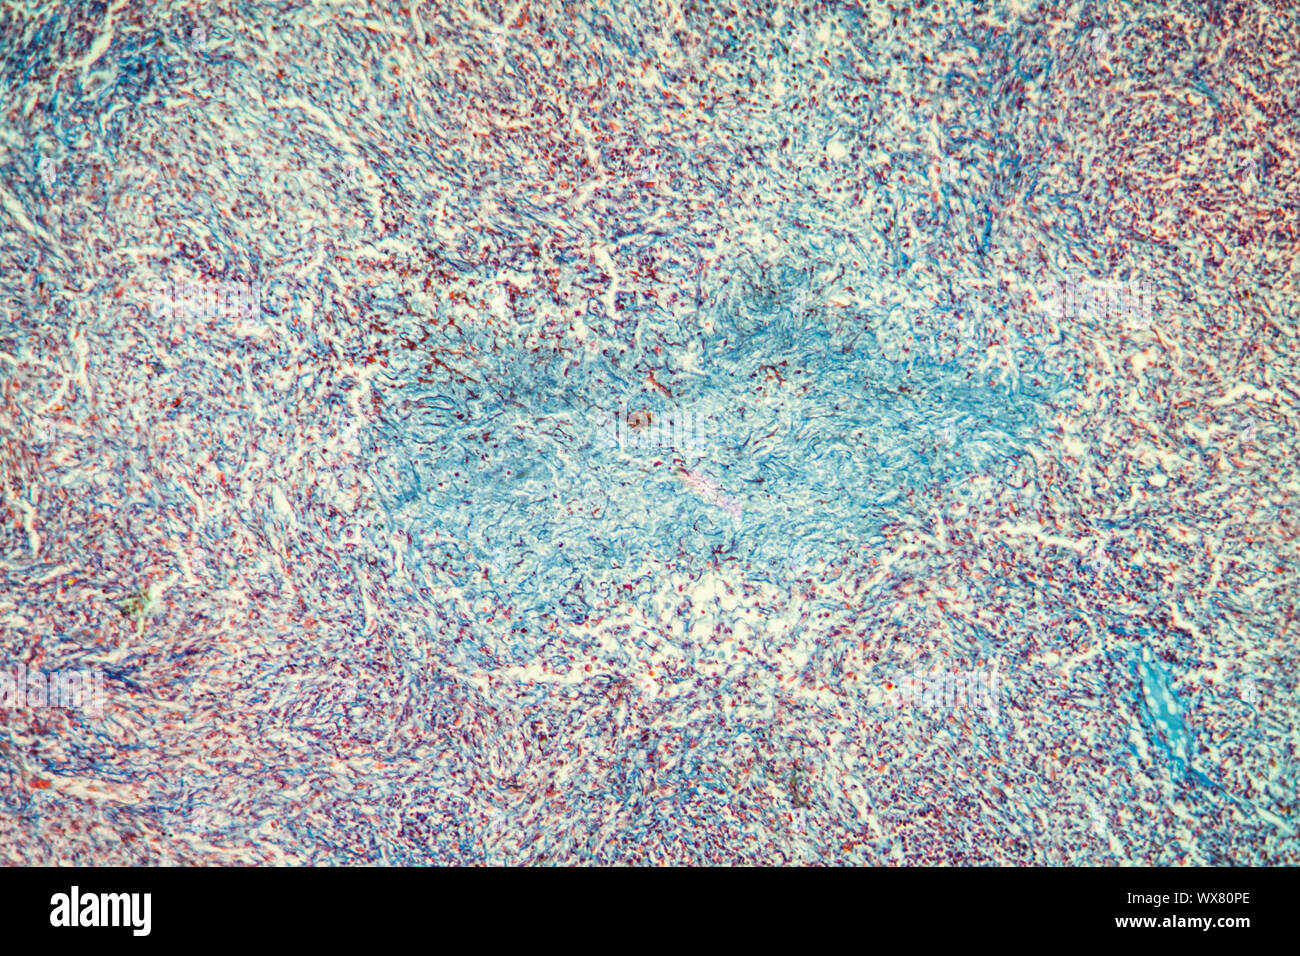 Gallbladder tumor tissue under the microscope 100x Stock Photo - Alamy